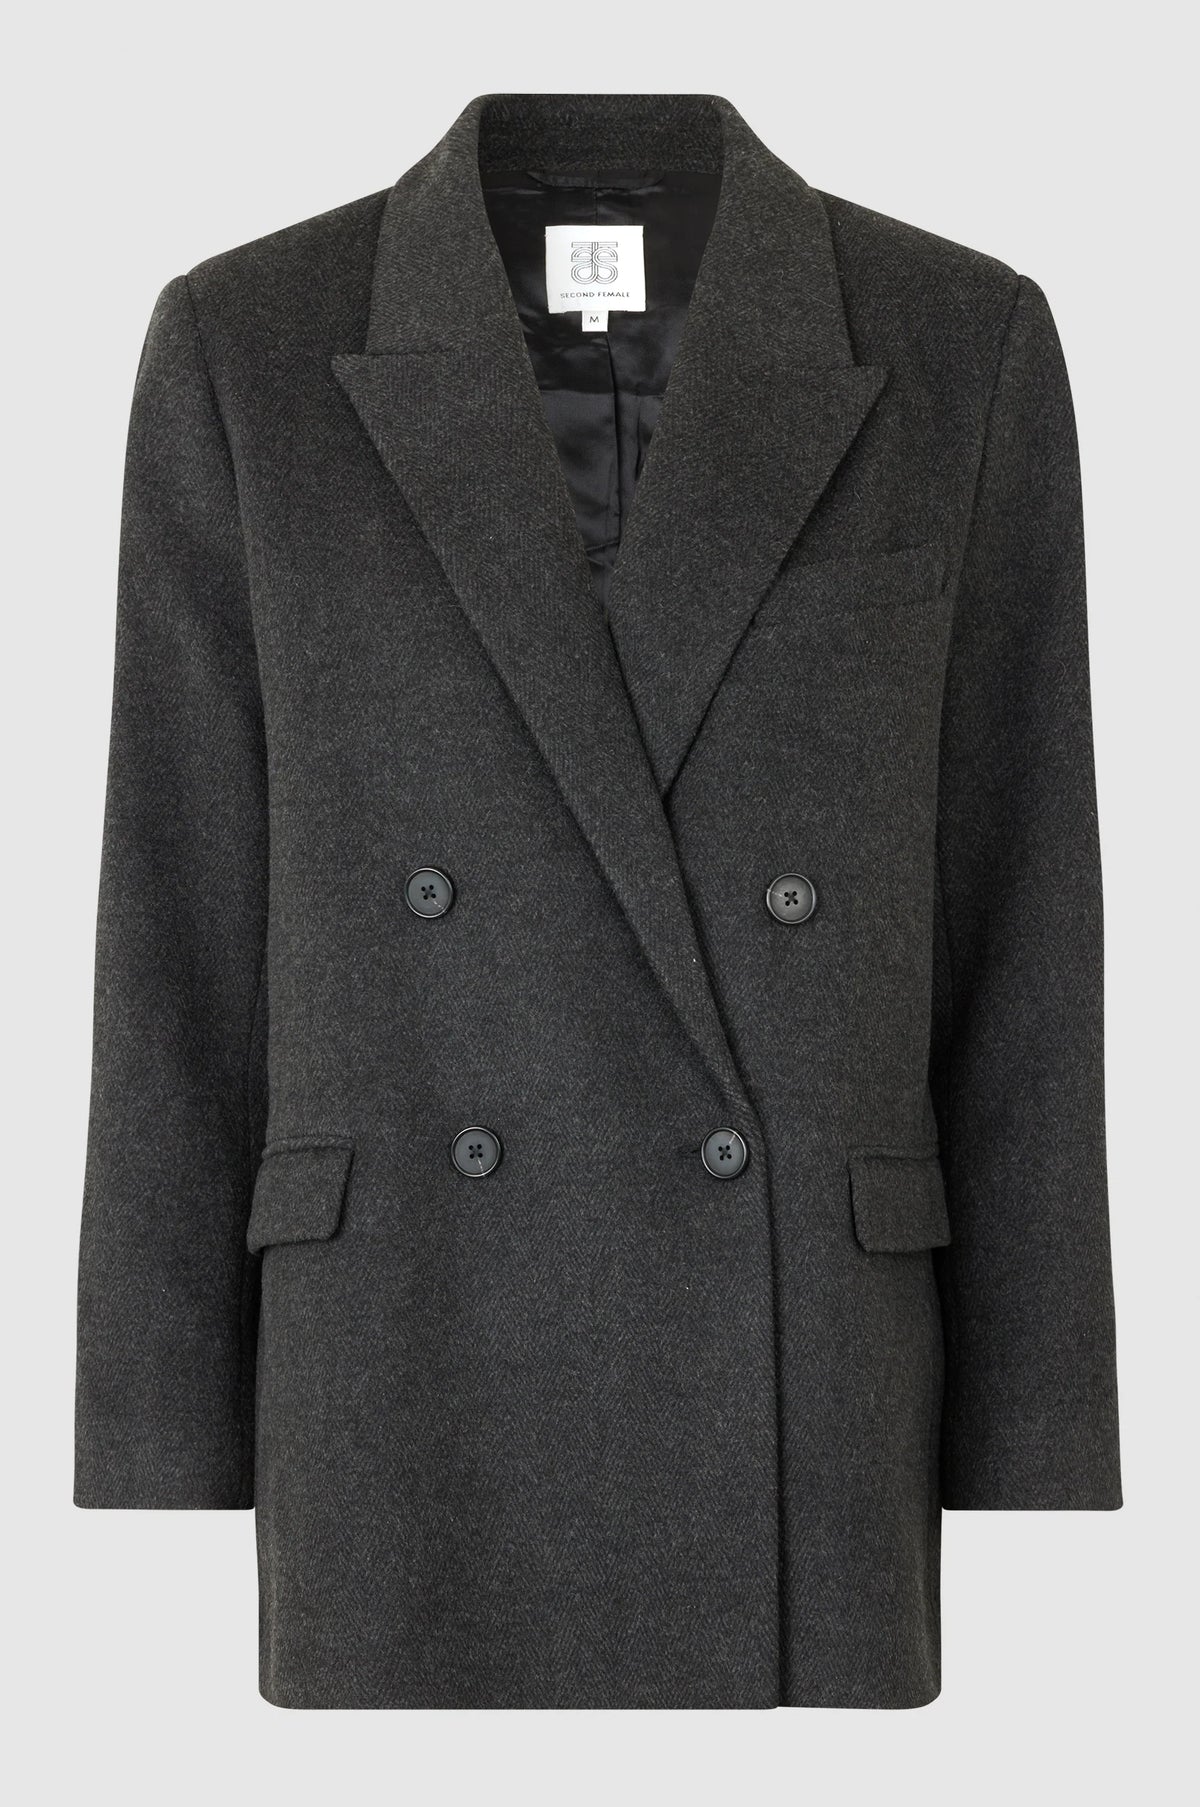 Wool blend dark grey double breasted blazer with peak lapel